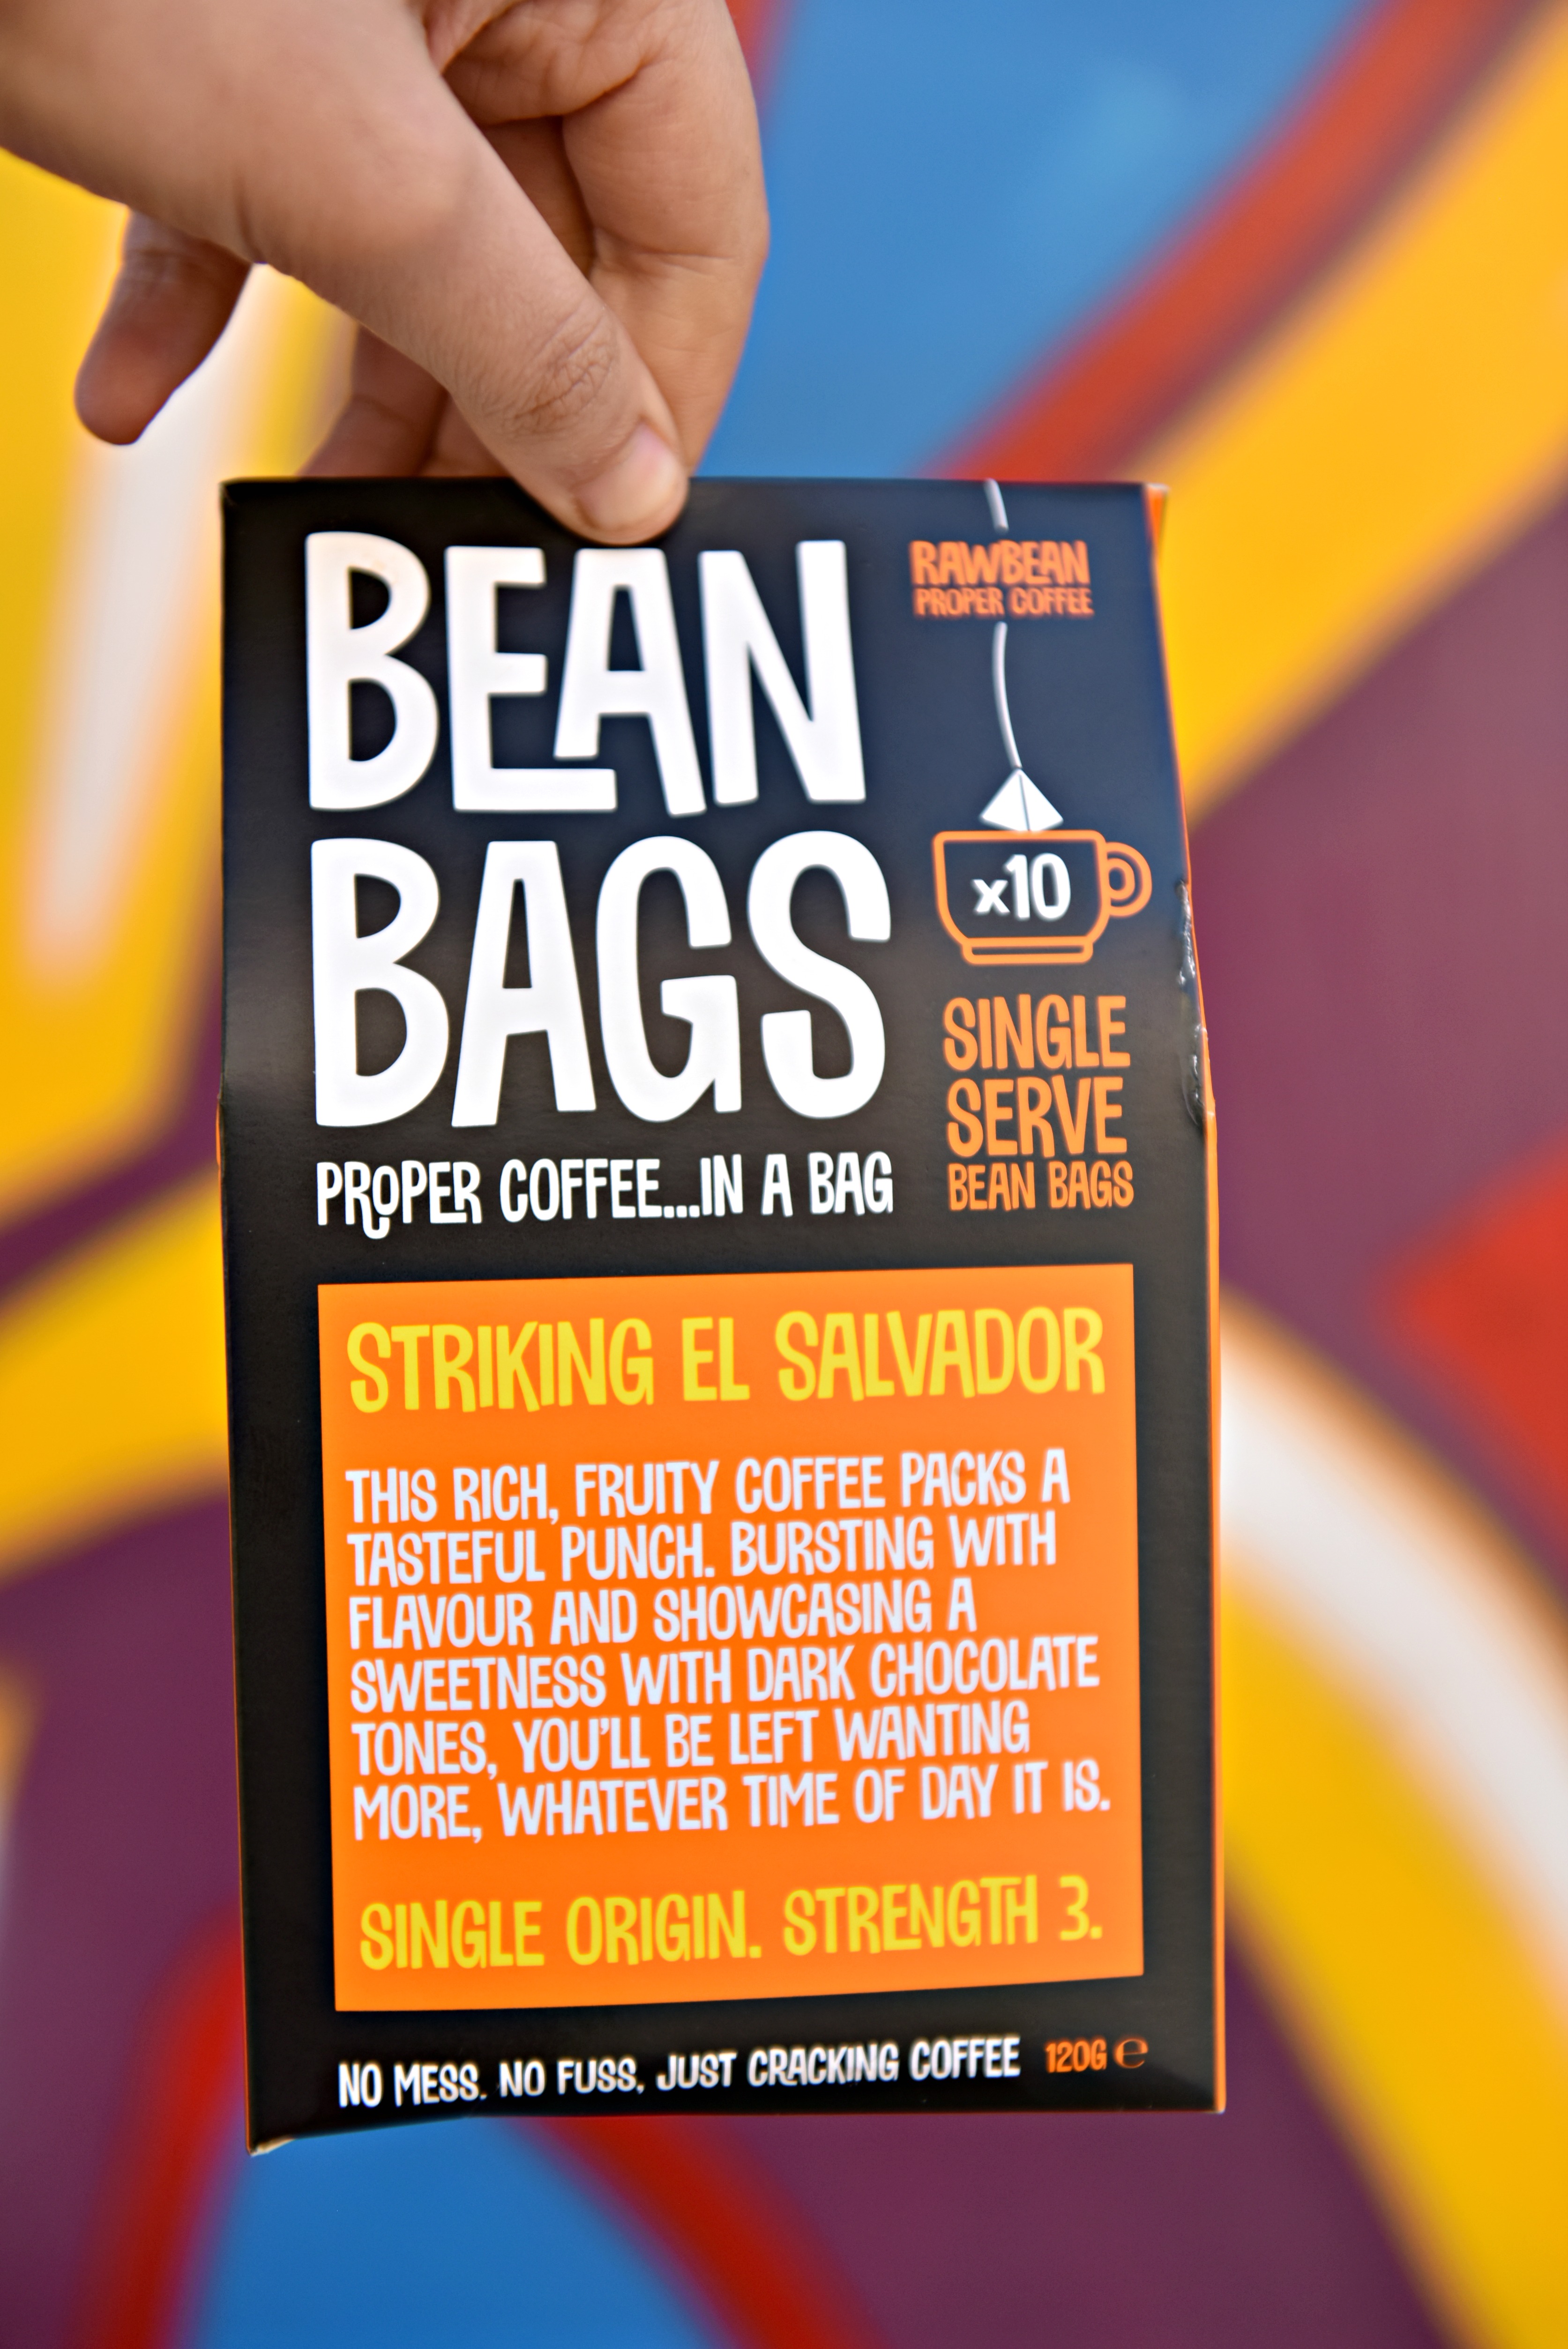 <img src="ana.jpg" alt="ana bean bags coffee"> 